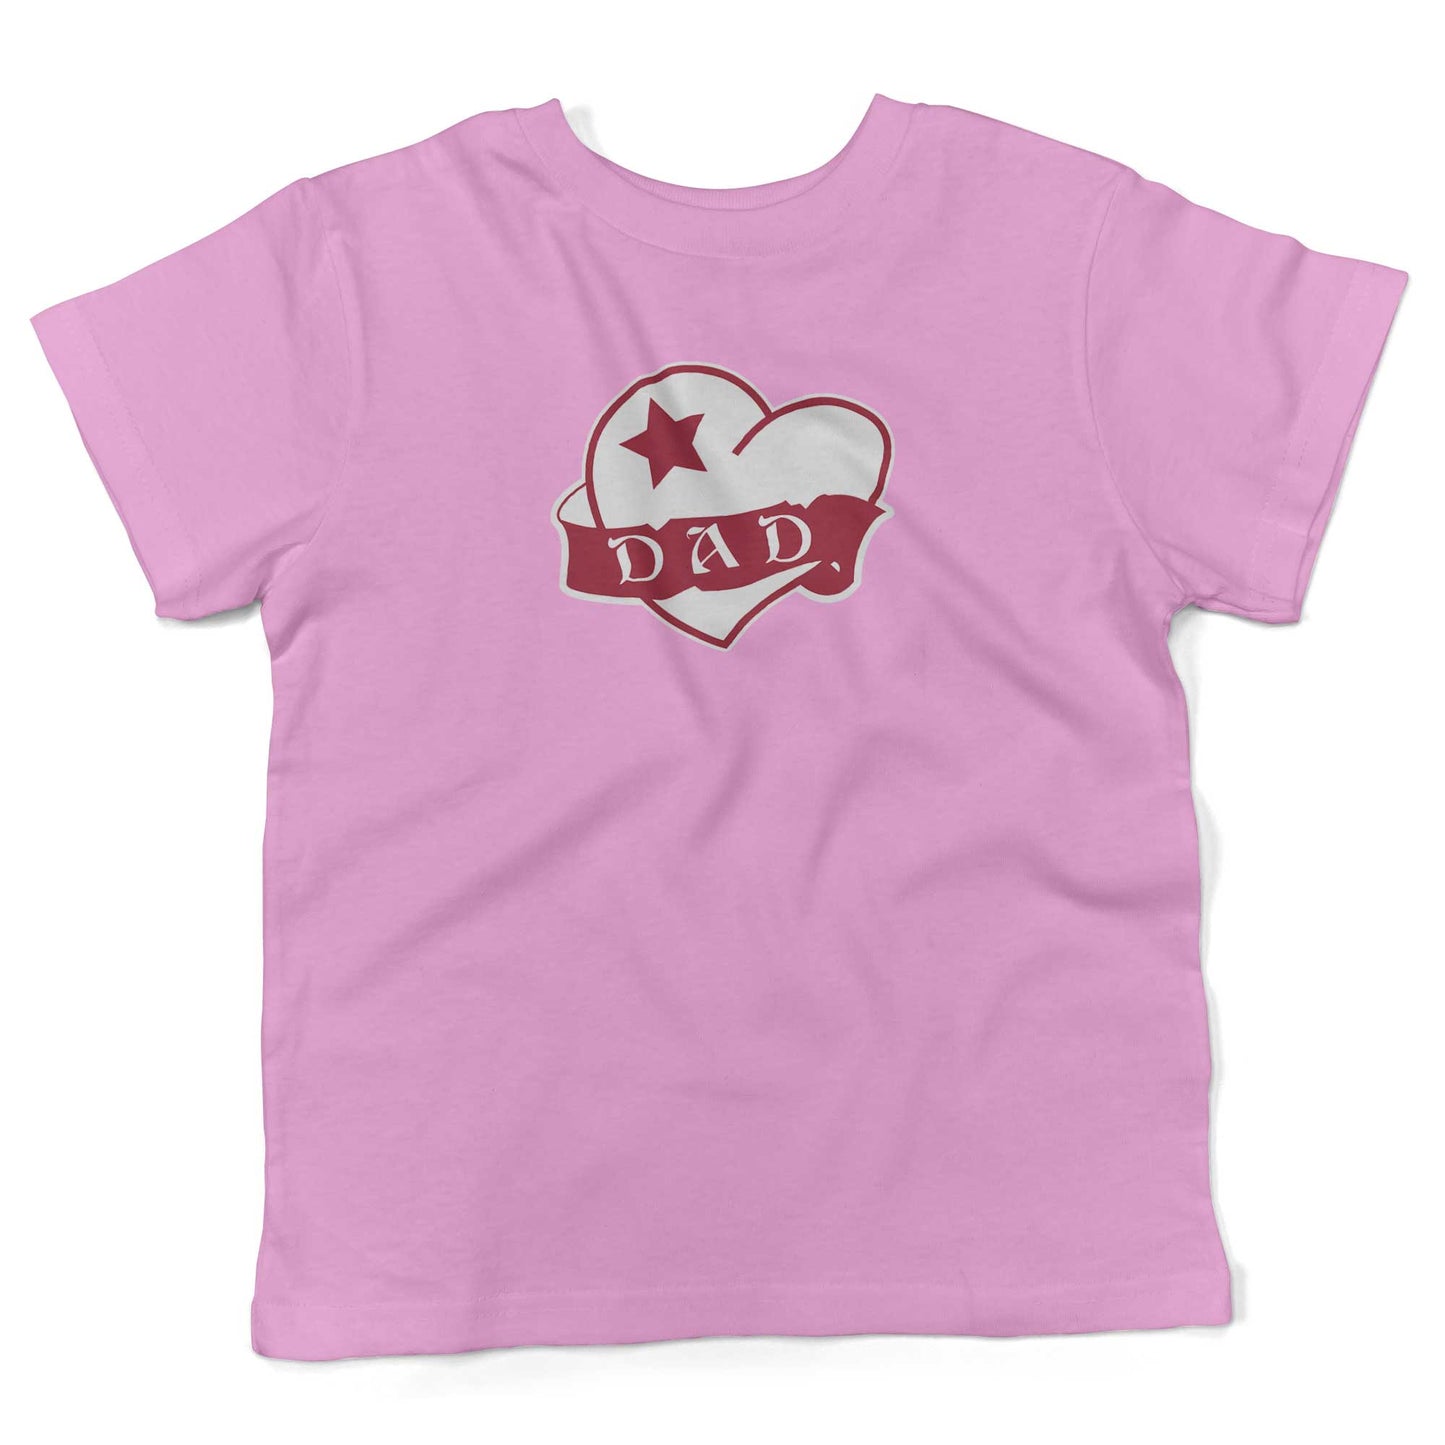 Dad Tattoo Heart Toddler Shirt-Organic Pink-2T